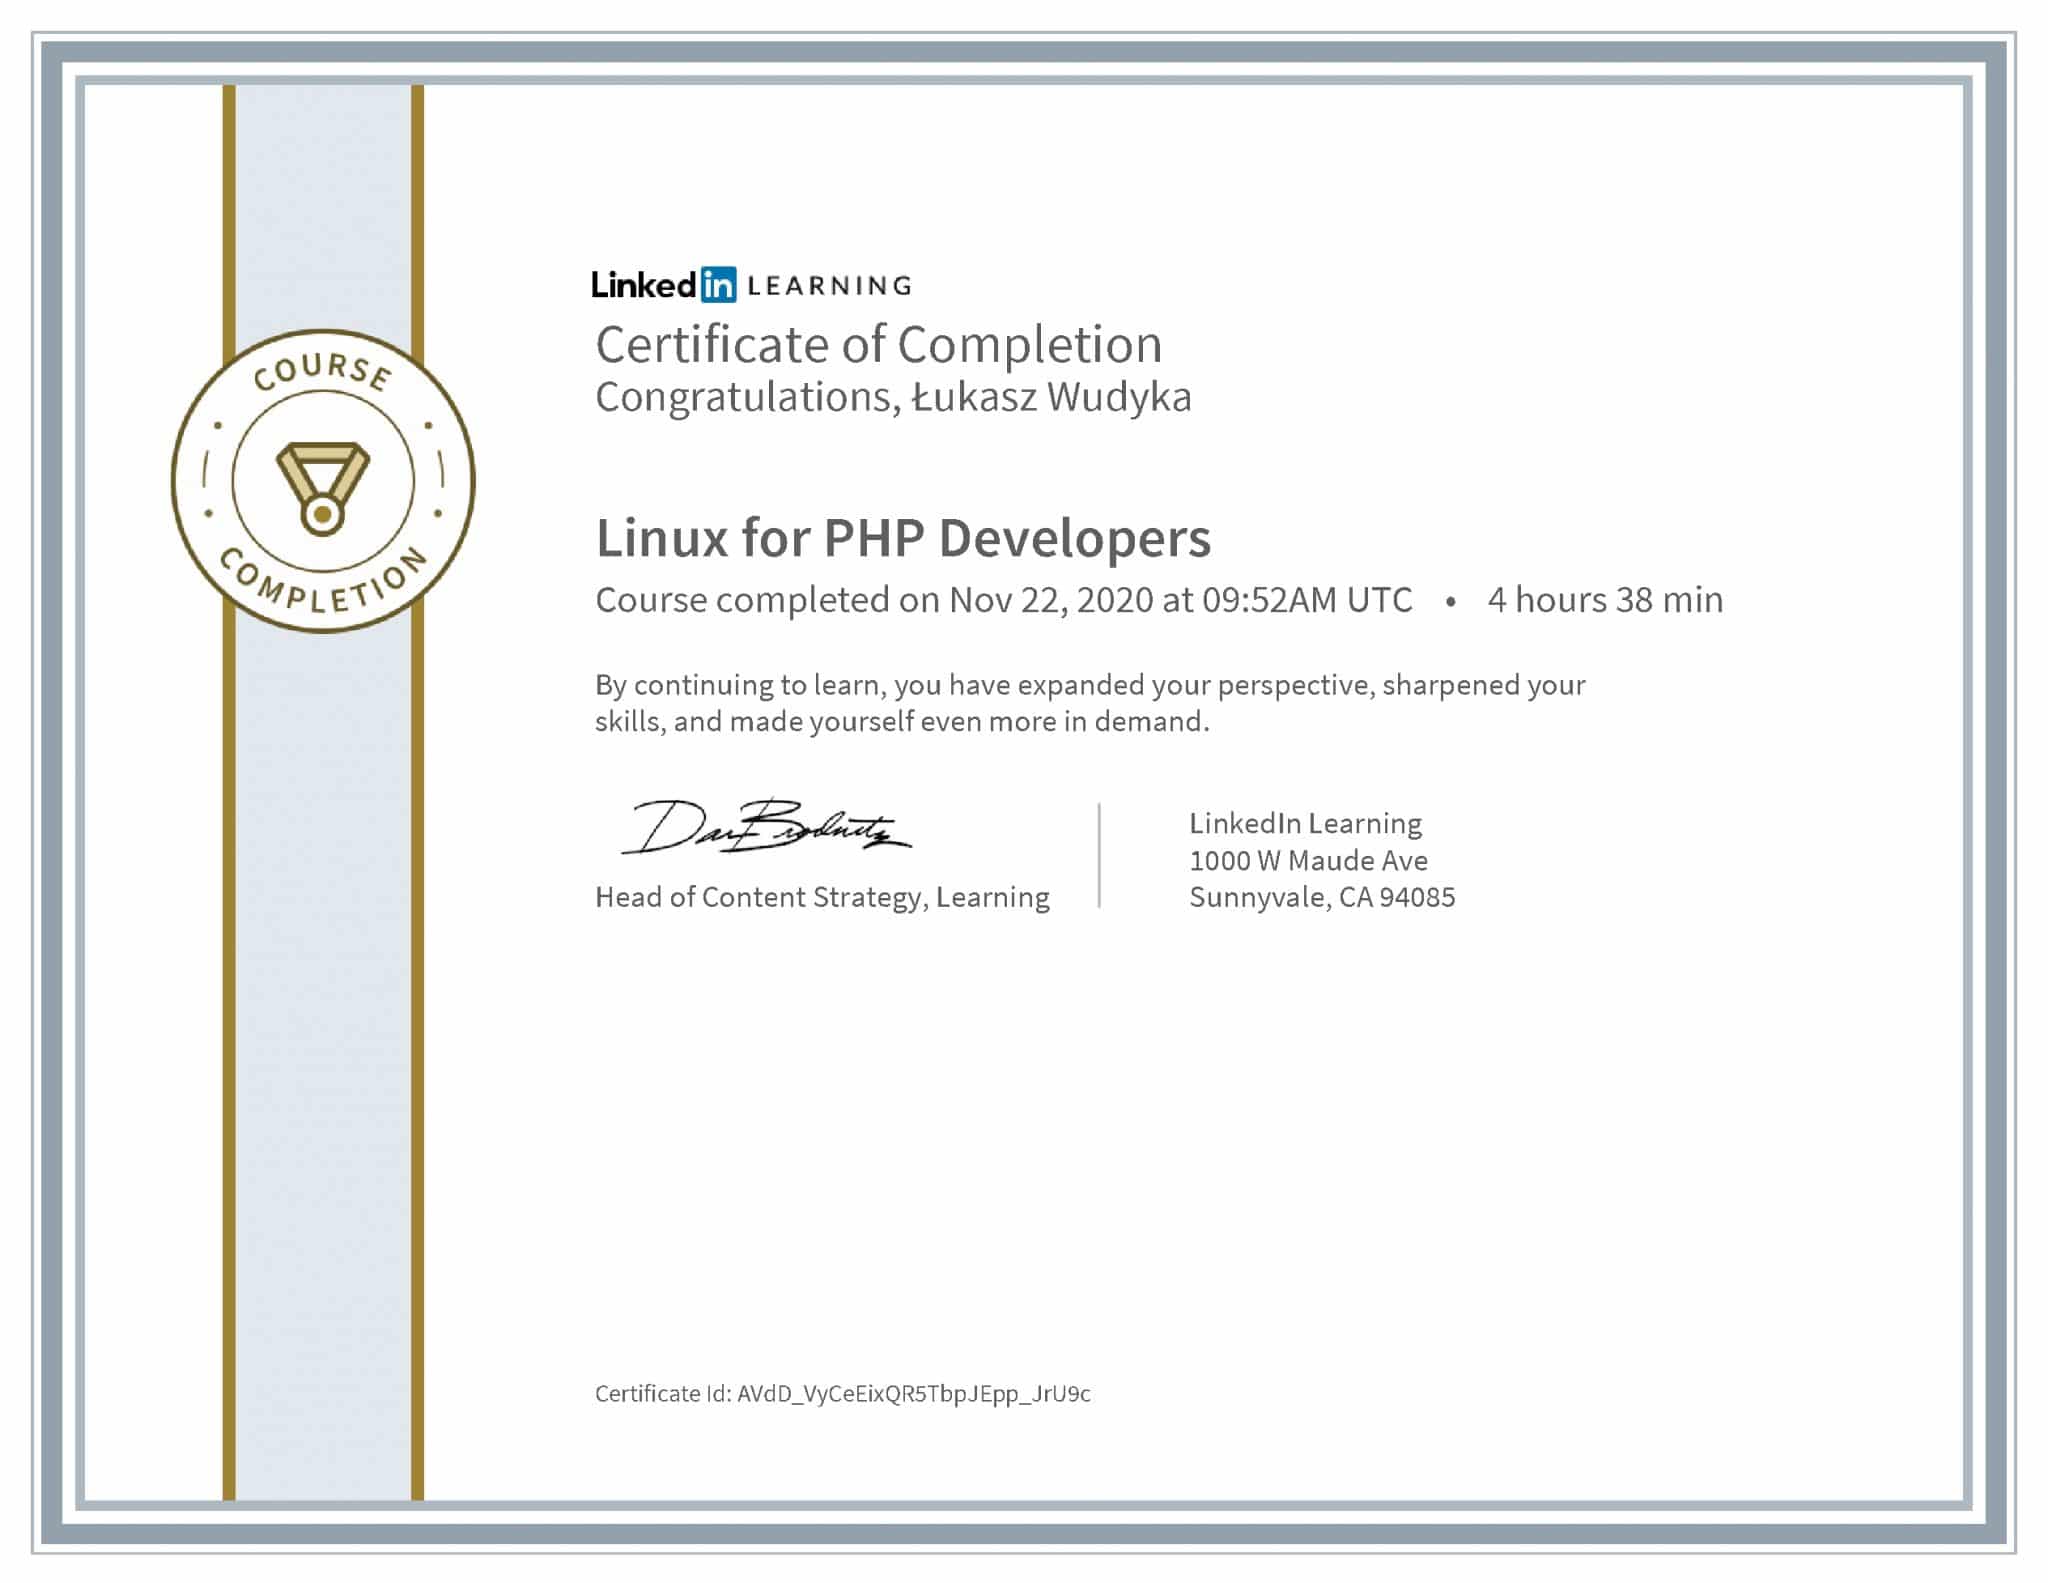 Łukasz Wudyka certyfikat LinkedIn Linux for PHP Developers